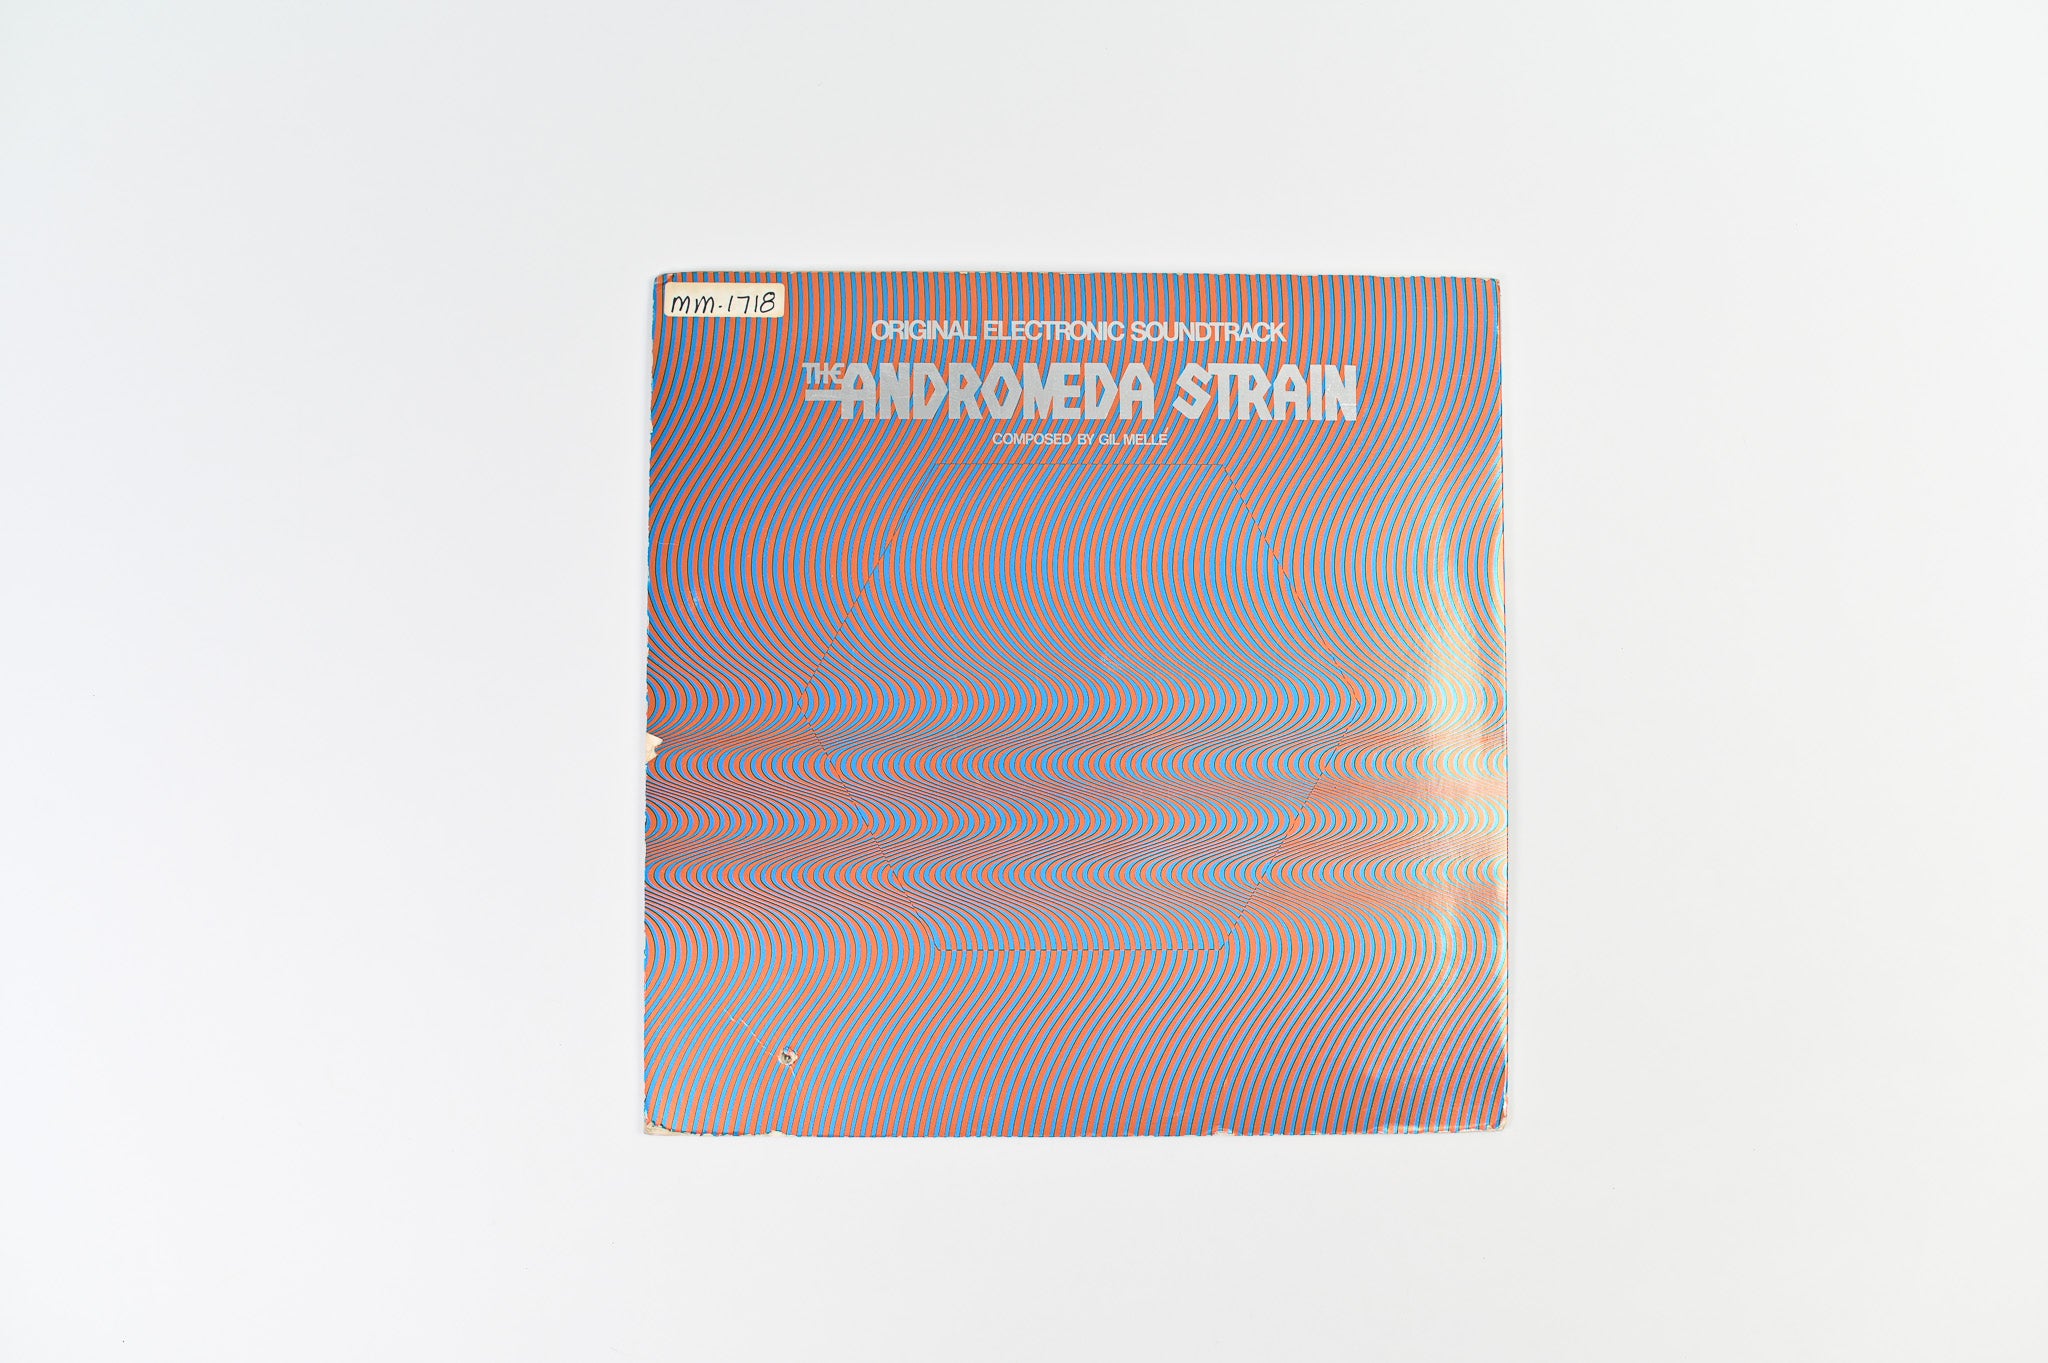 Gil Mellé - The Andromeda Strain Original Electronic Soundtrack on Kapp Hexagonal Gimmick Cover